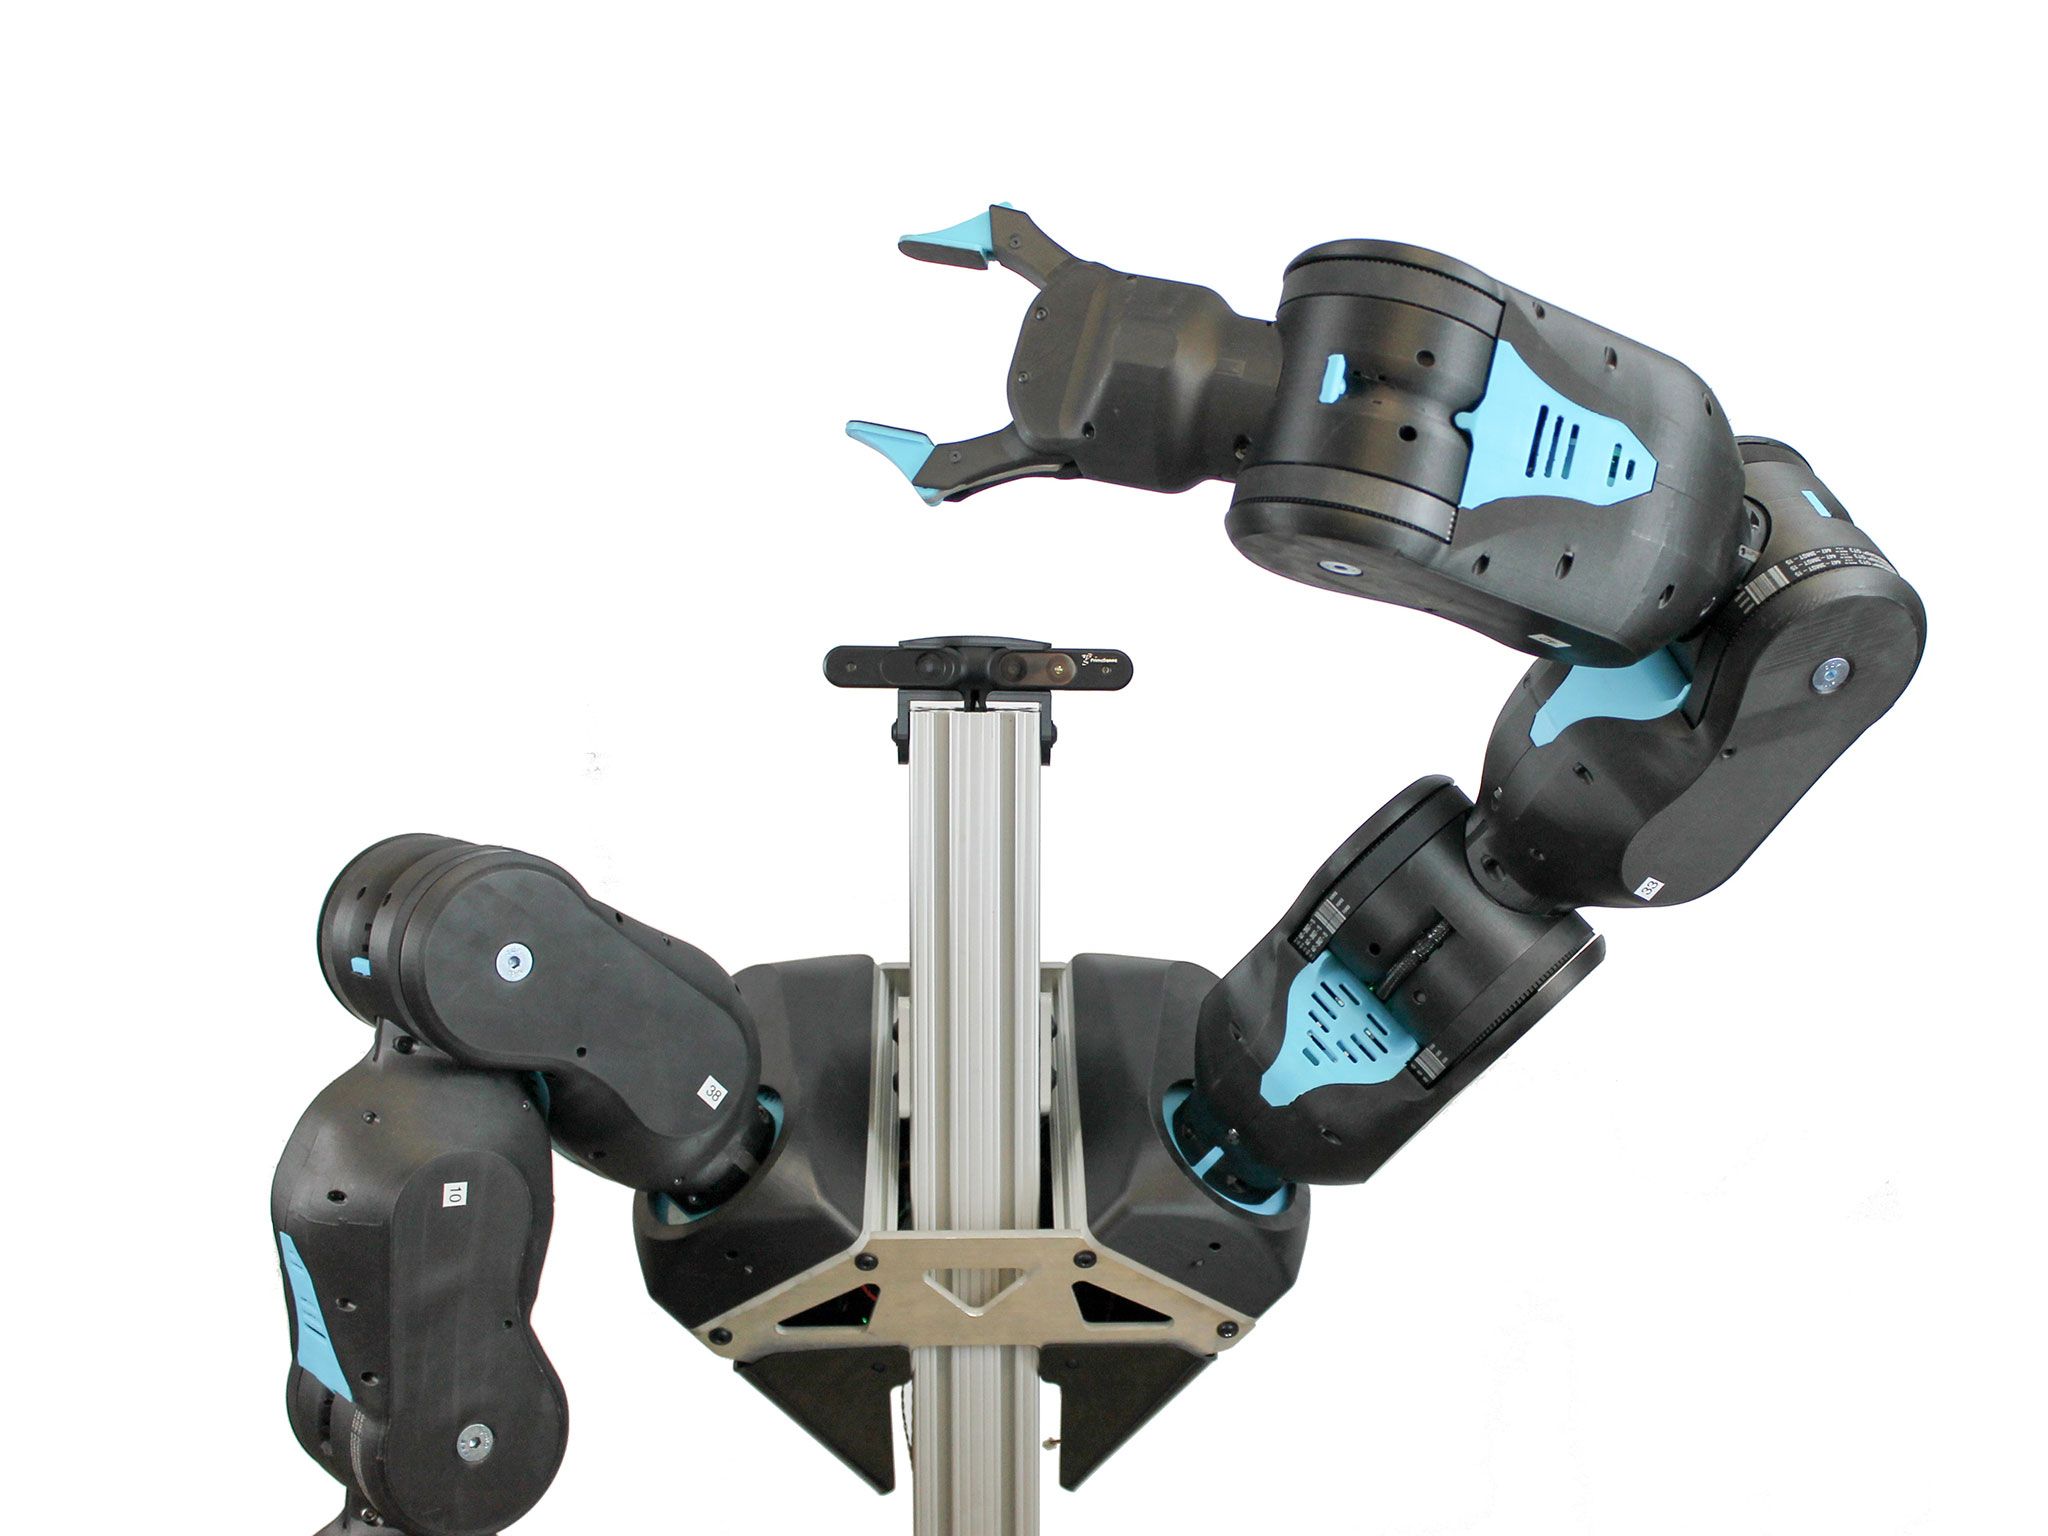 Blue Is a New Low-Cost Robot Arm from UC Berkeley - IEEE Spectrum